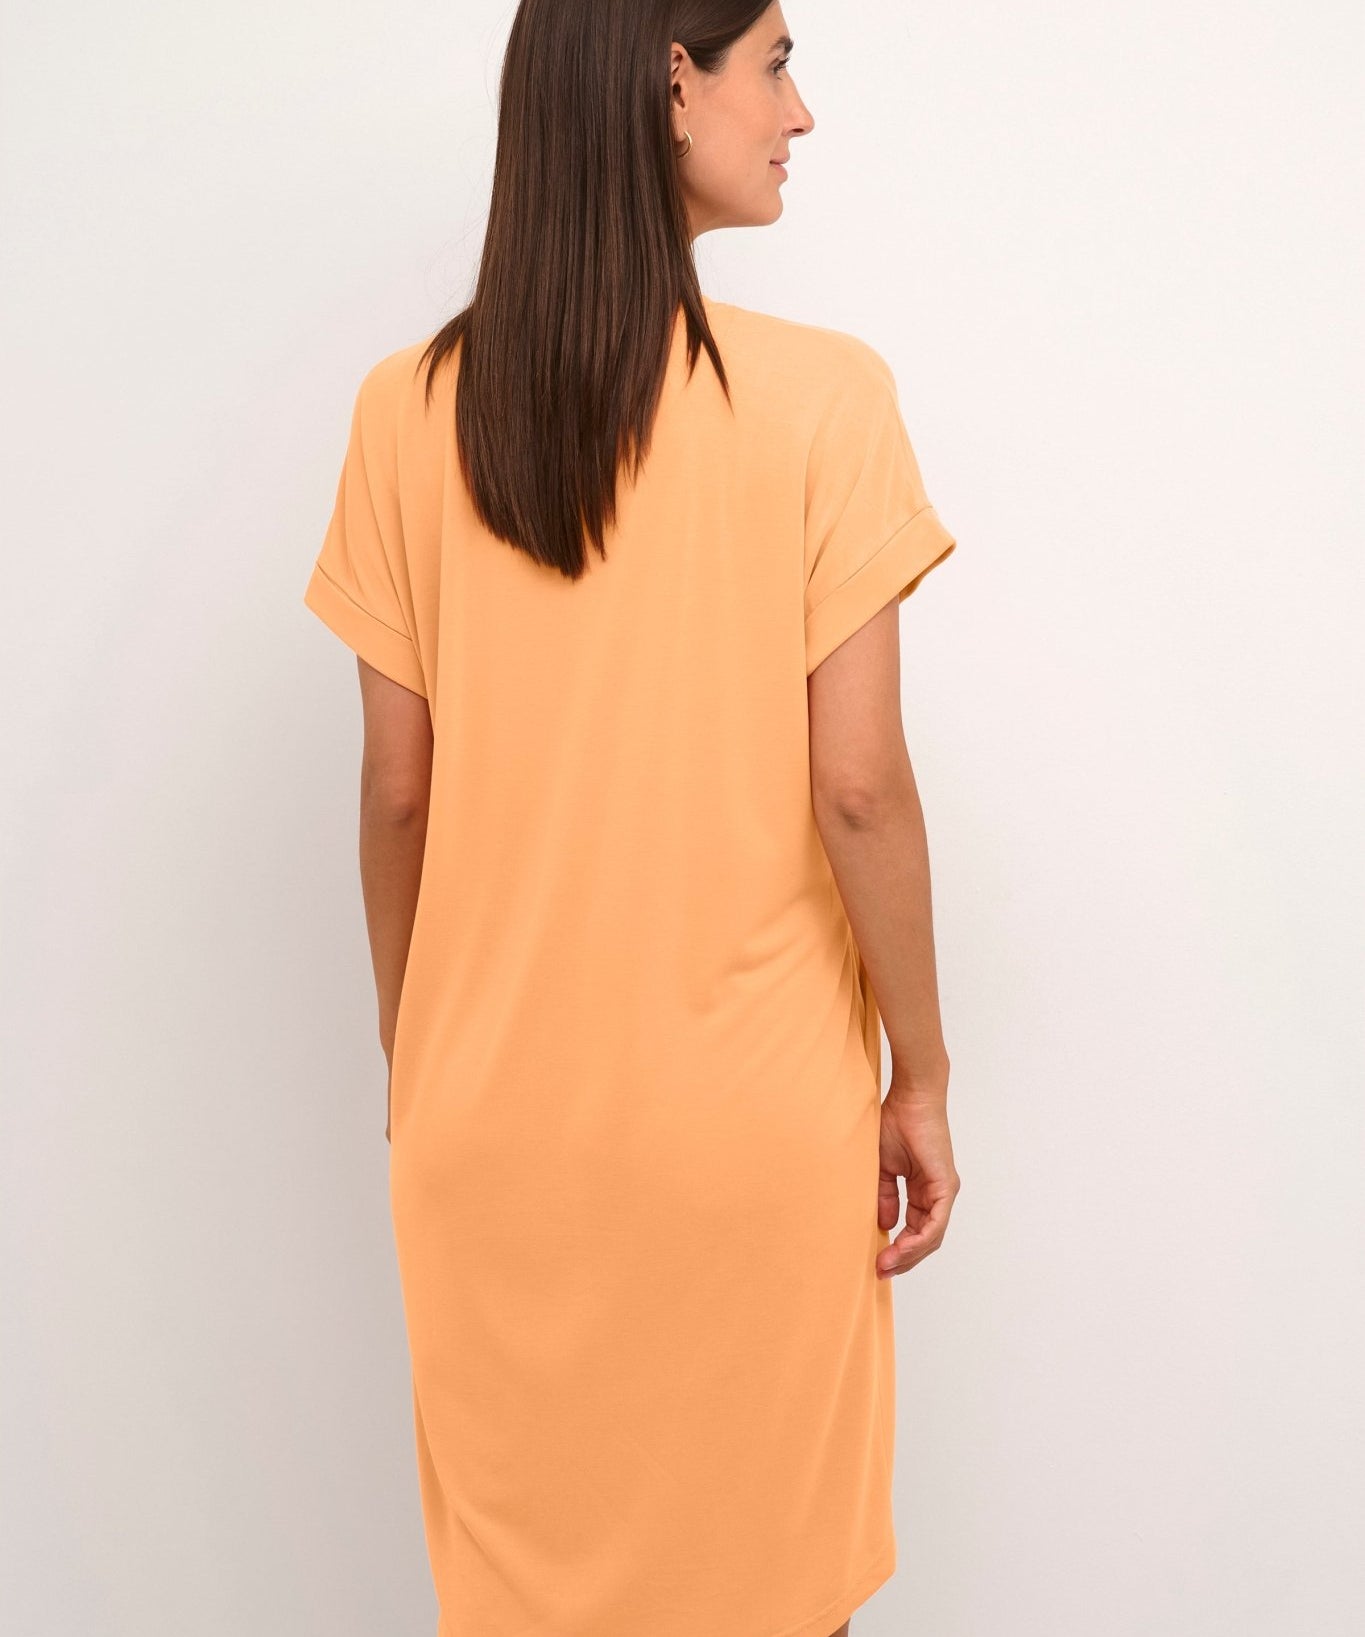 Kajsa Jersey knit T-shirt dress by Culture - tangerine - Blue Sky Fashions & Lingerie